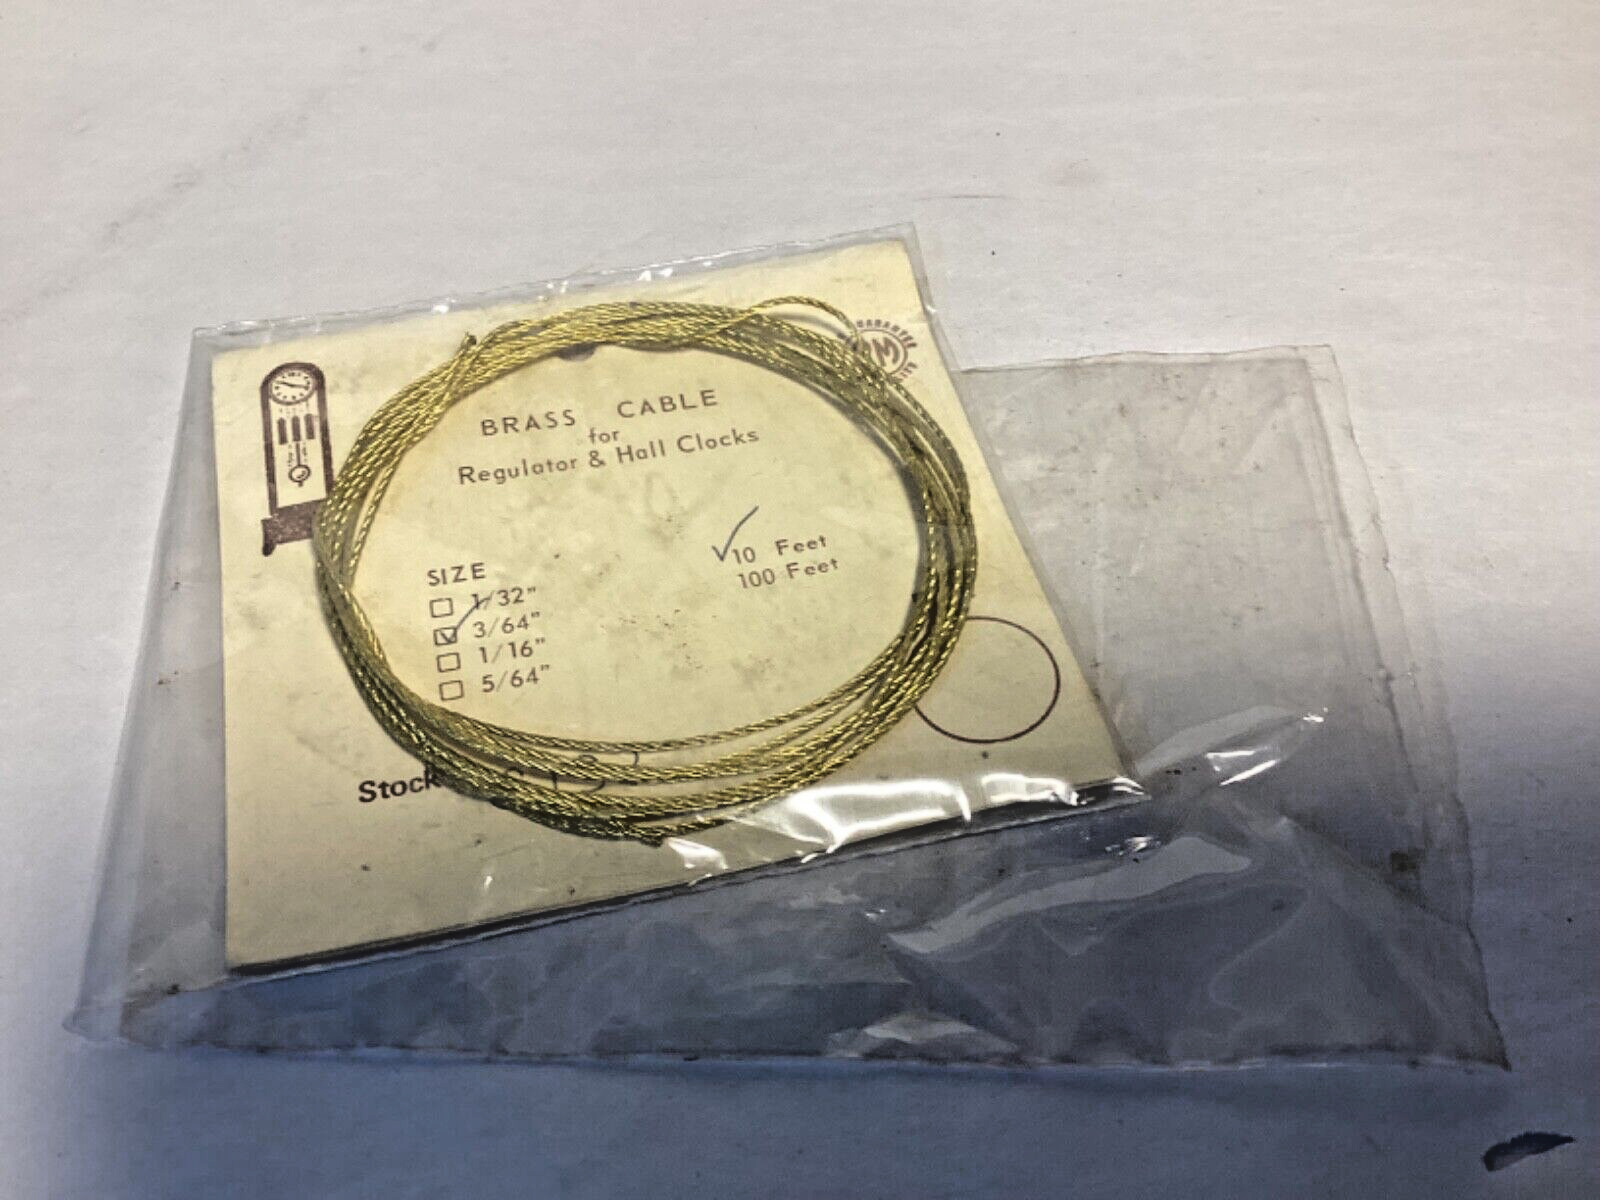 Vintage NOS PM brass cable 3/64” 10ft clock repair restore part